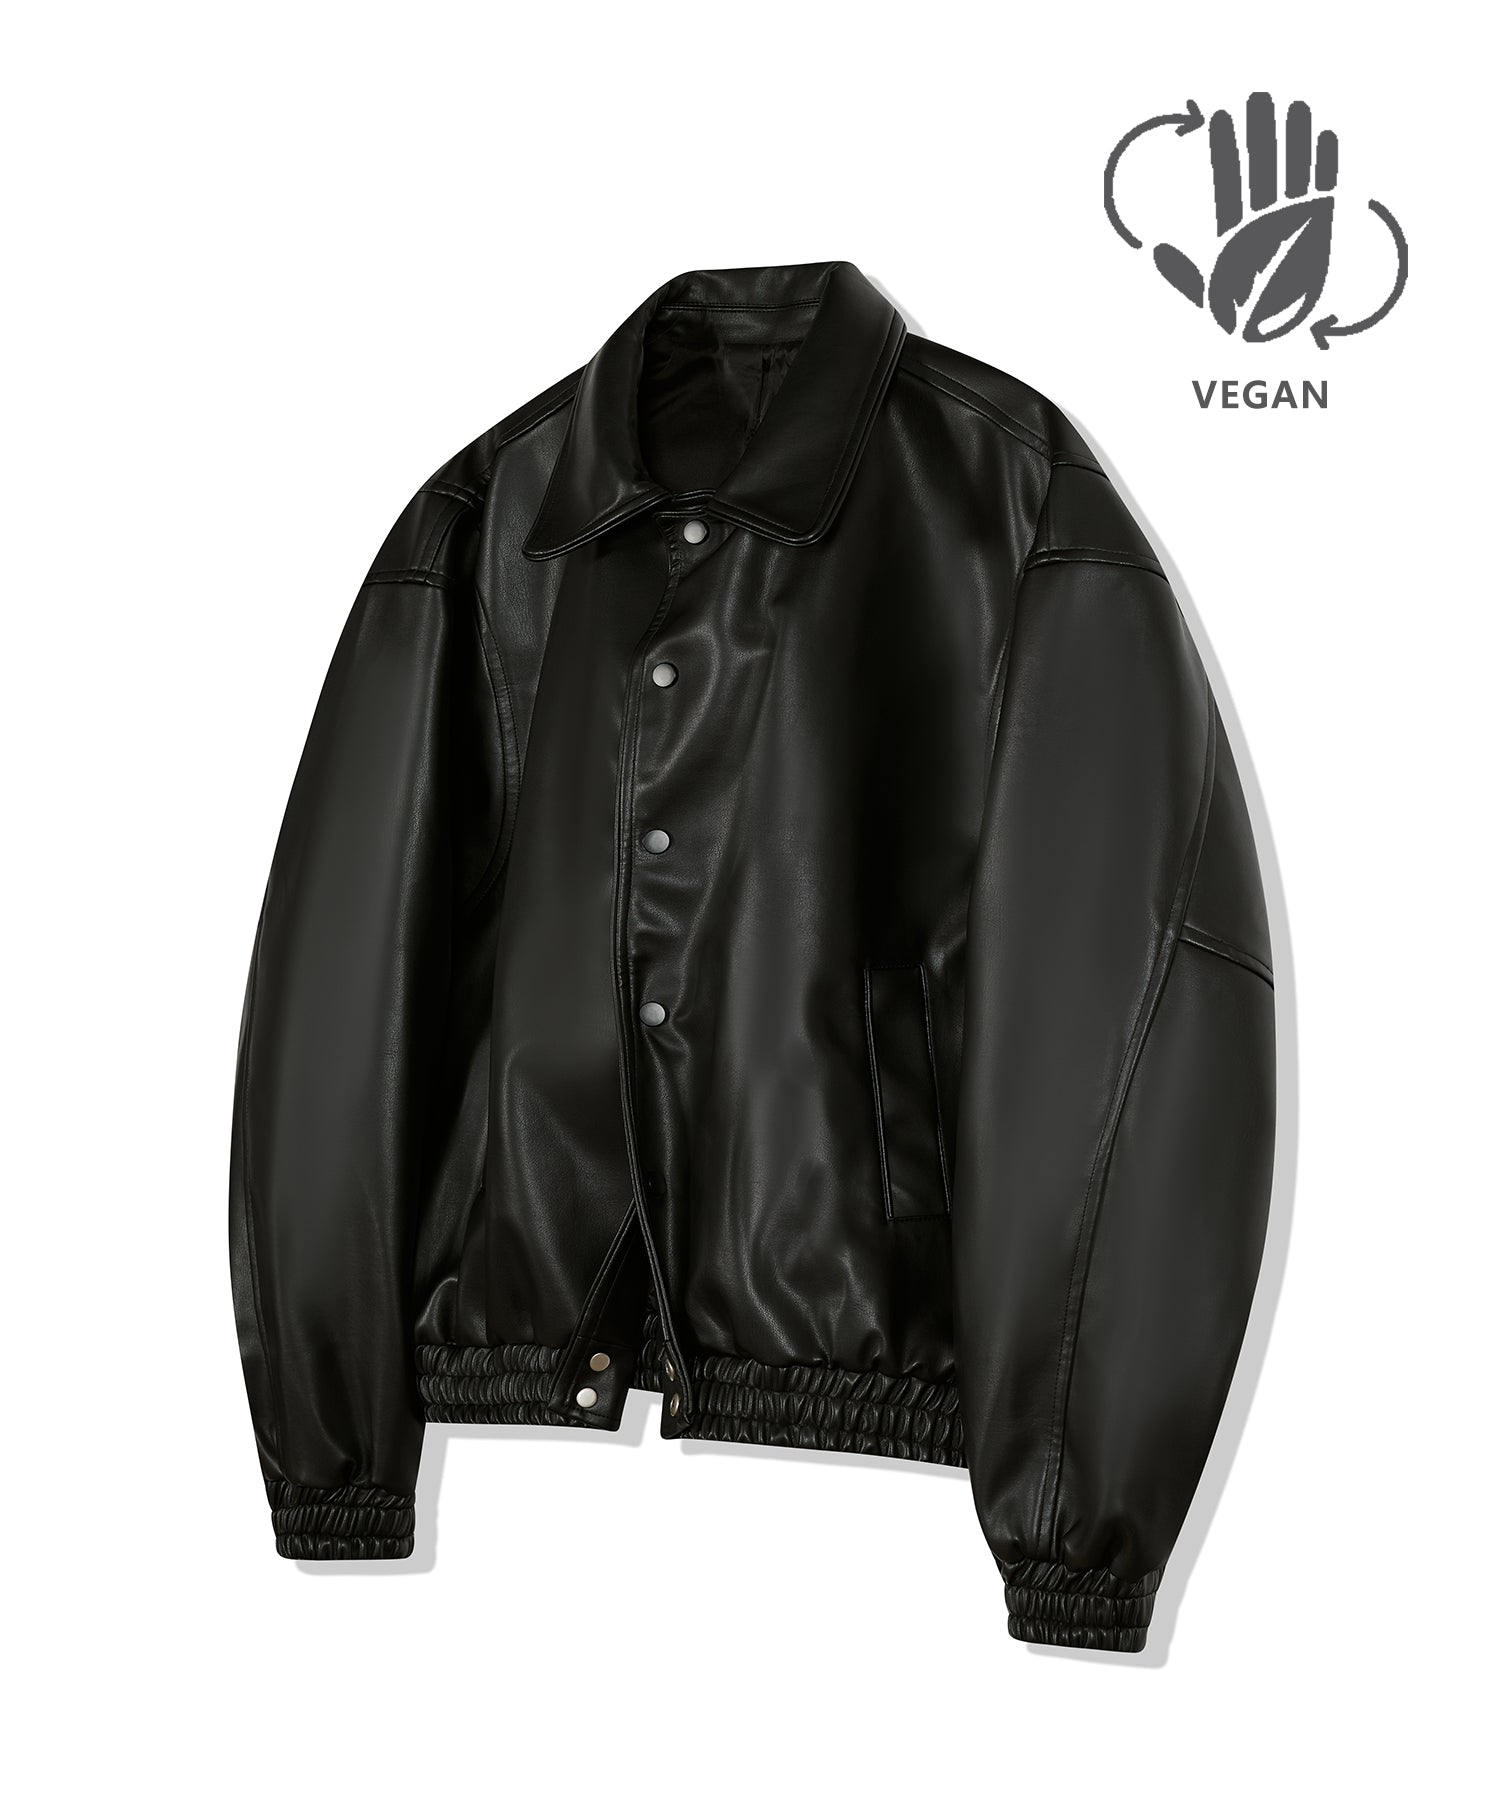 87-STAN030 [Vegan Leather] Voldest Stylish Line Varsity Leather Jacket Black